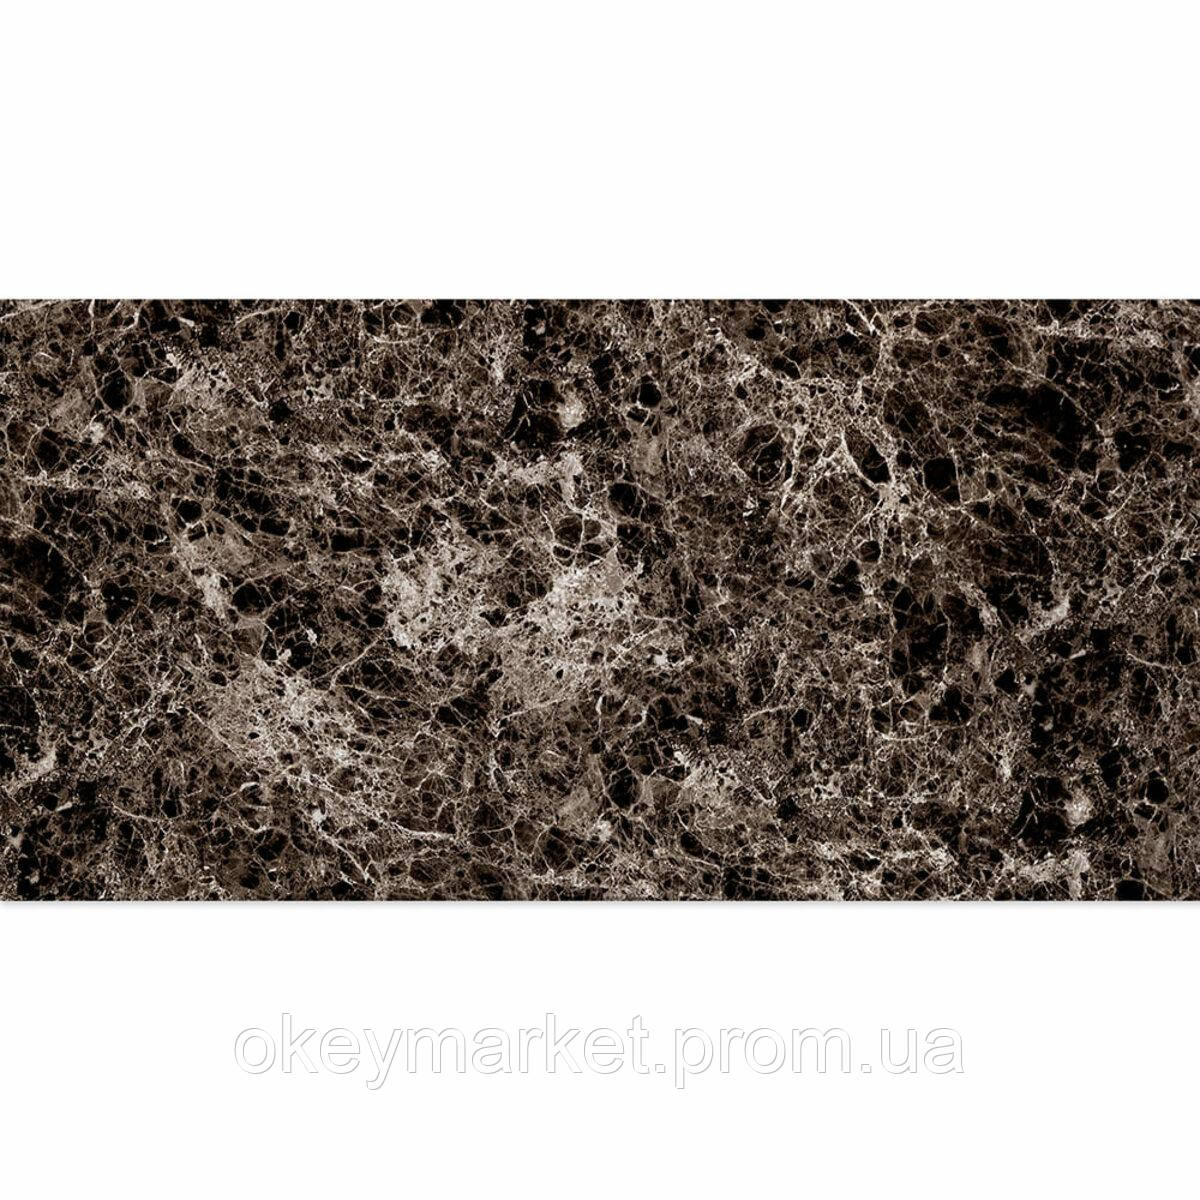 Декоративная ПВХ плита серый темно-серый мрамор 0,6*1,2мх3мм SW-00002271